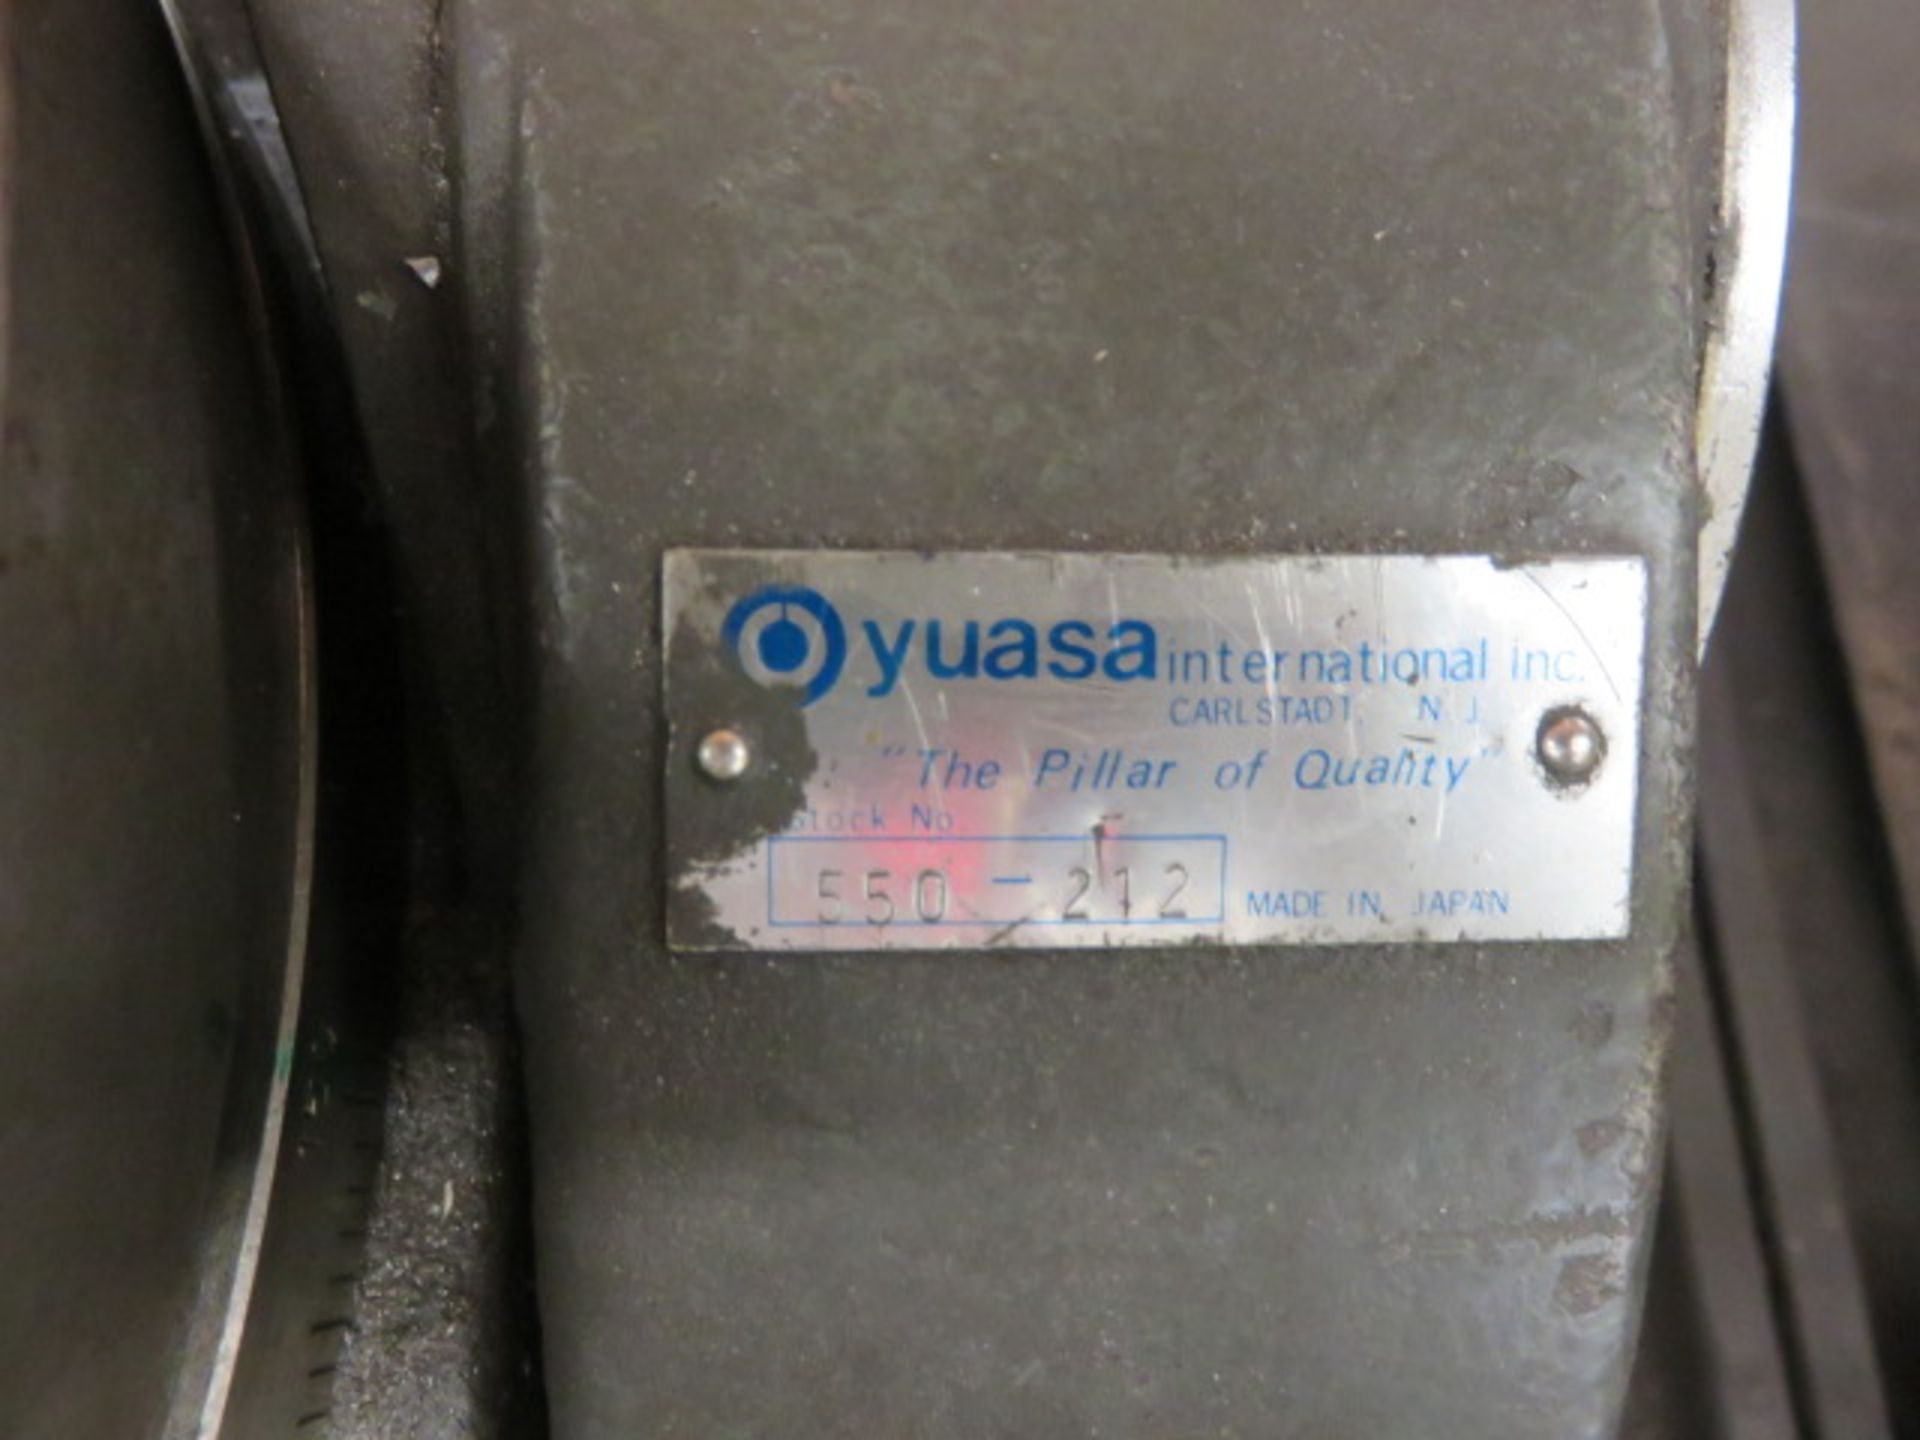 YUASA NO. 550-212 12 IN. TILTING ROTARY TABLE - Image 4 of 4